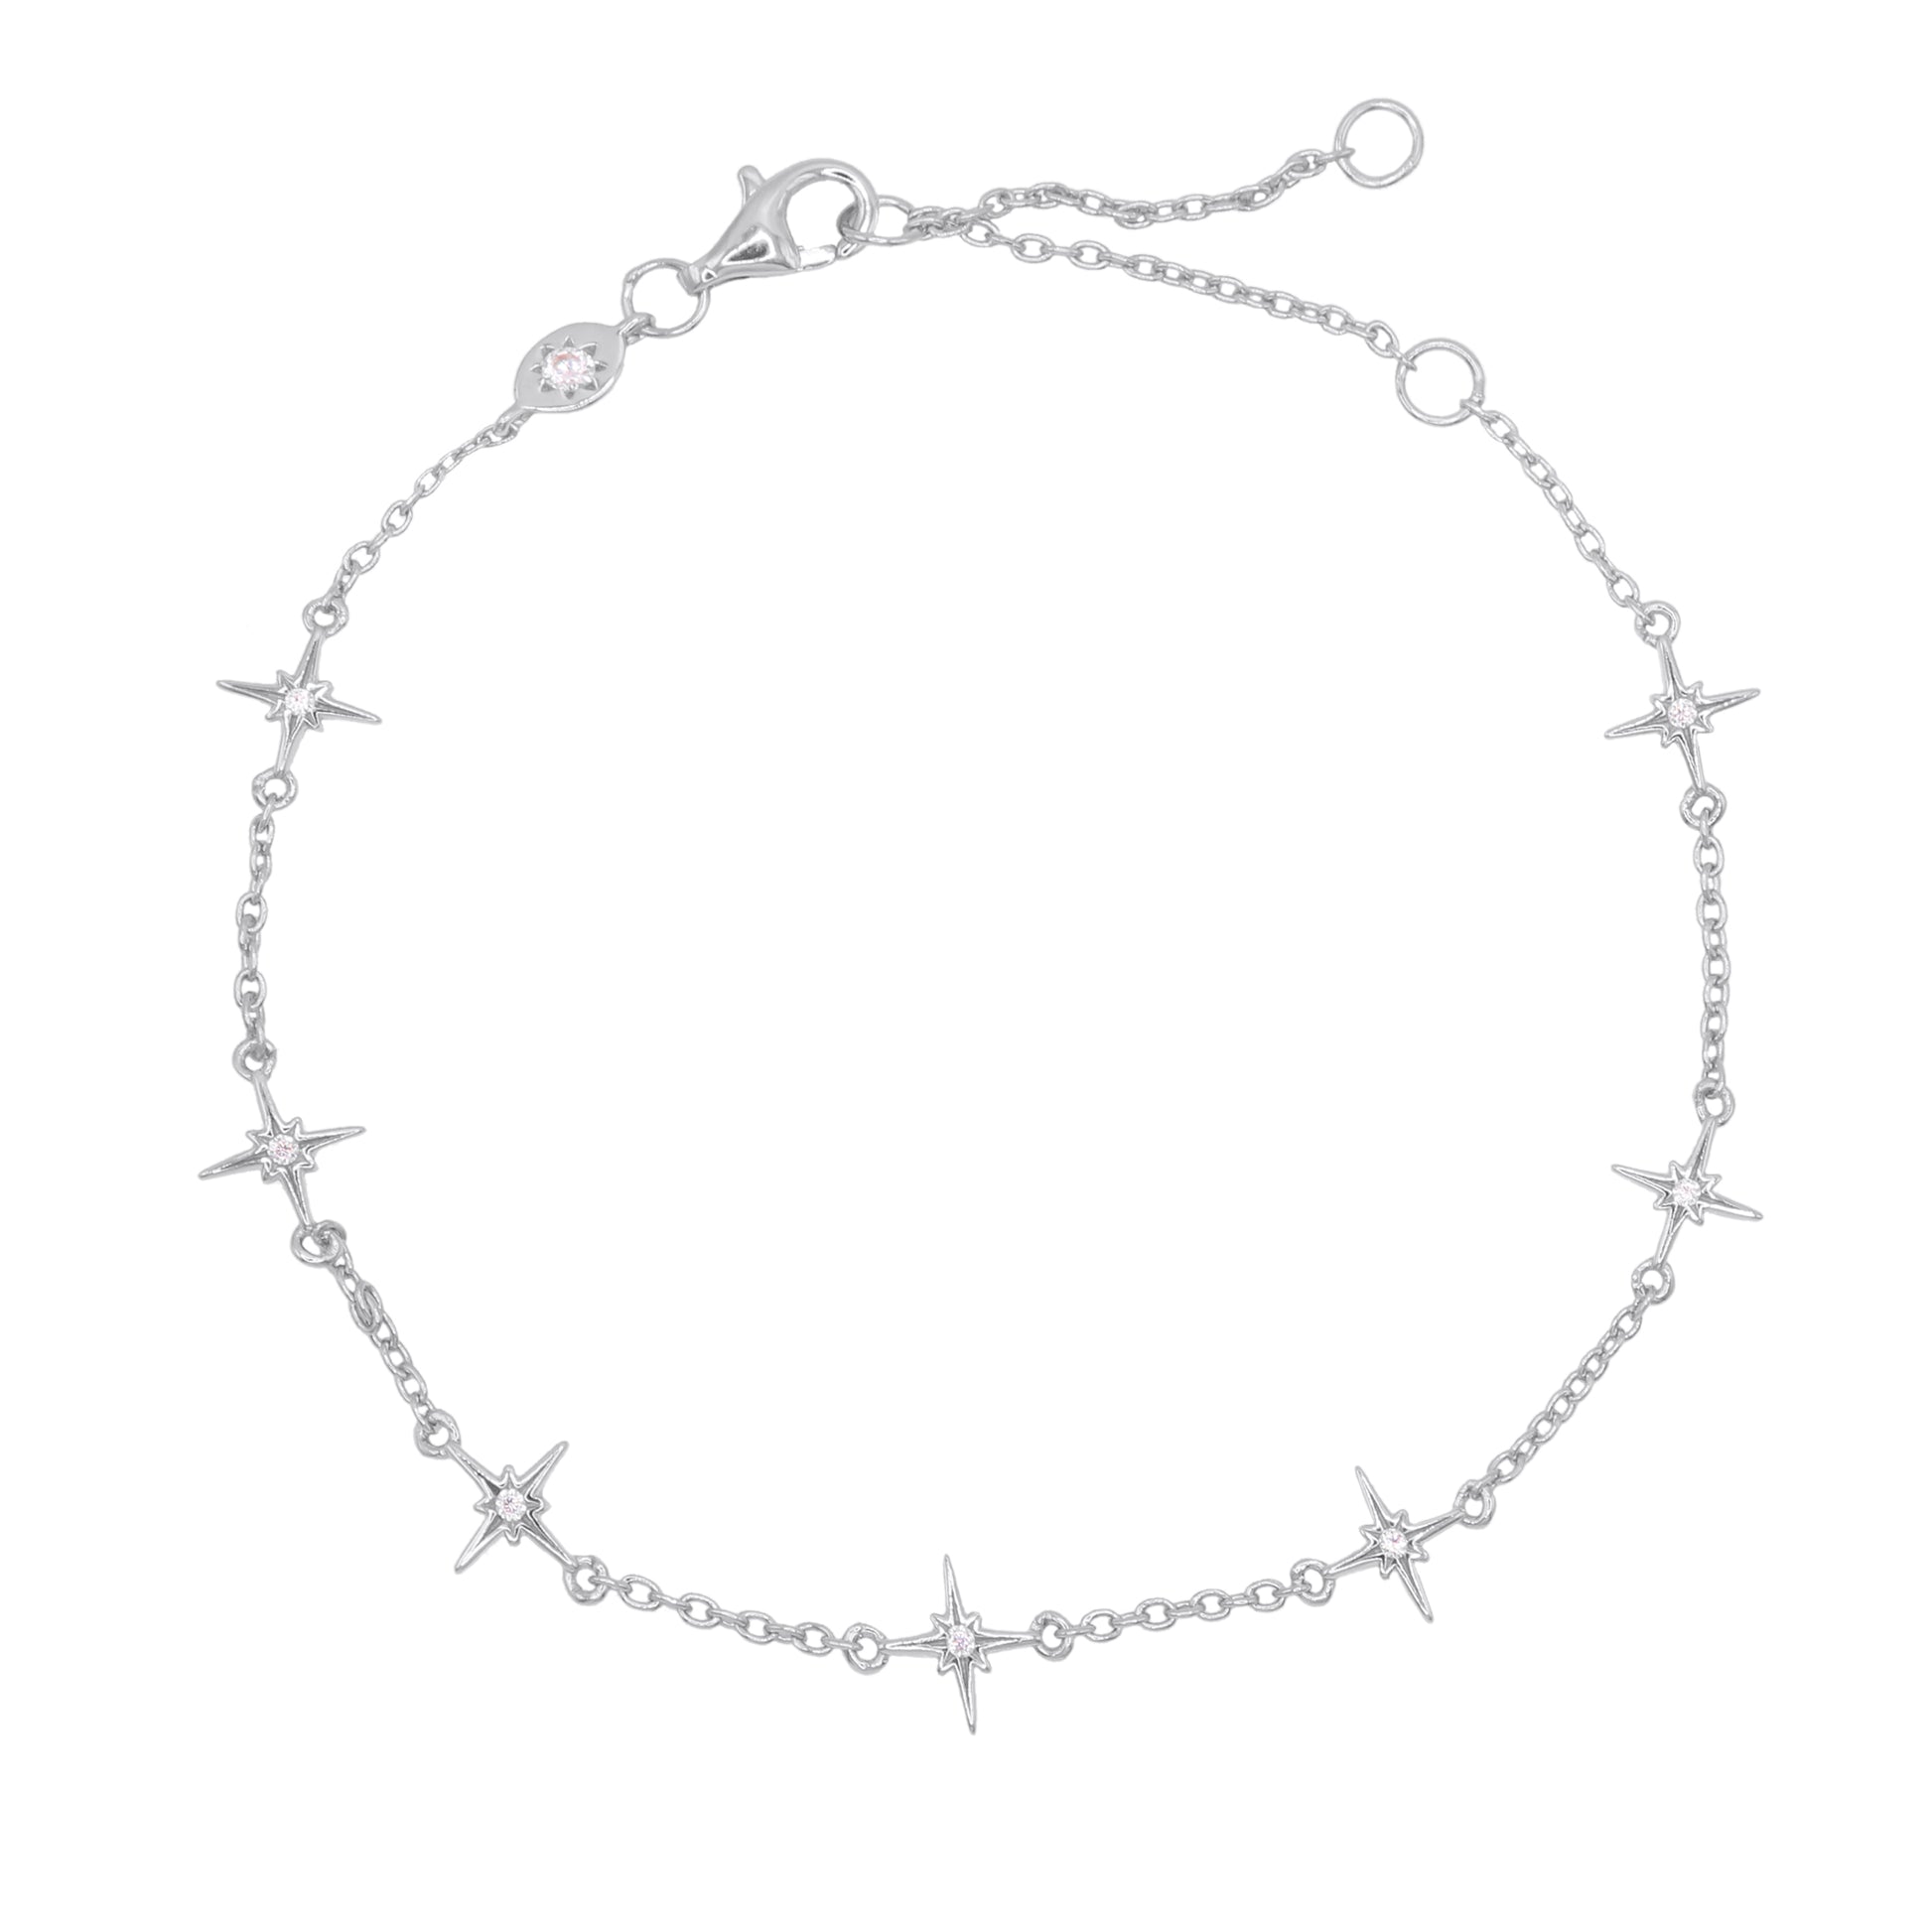 Tessa Starburst Bracelet | 925 Sterling Silver